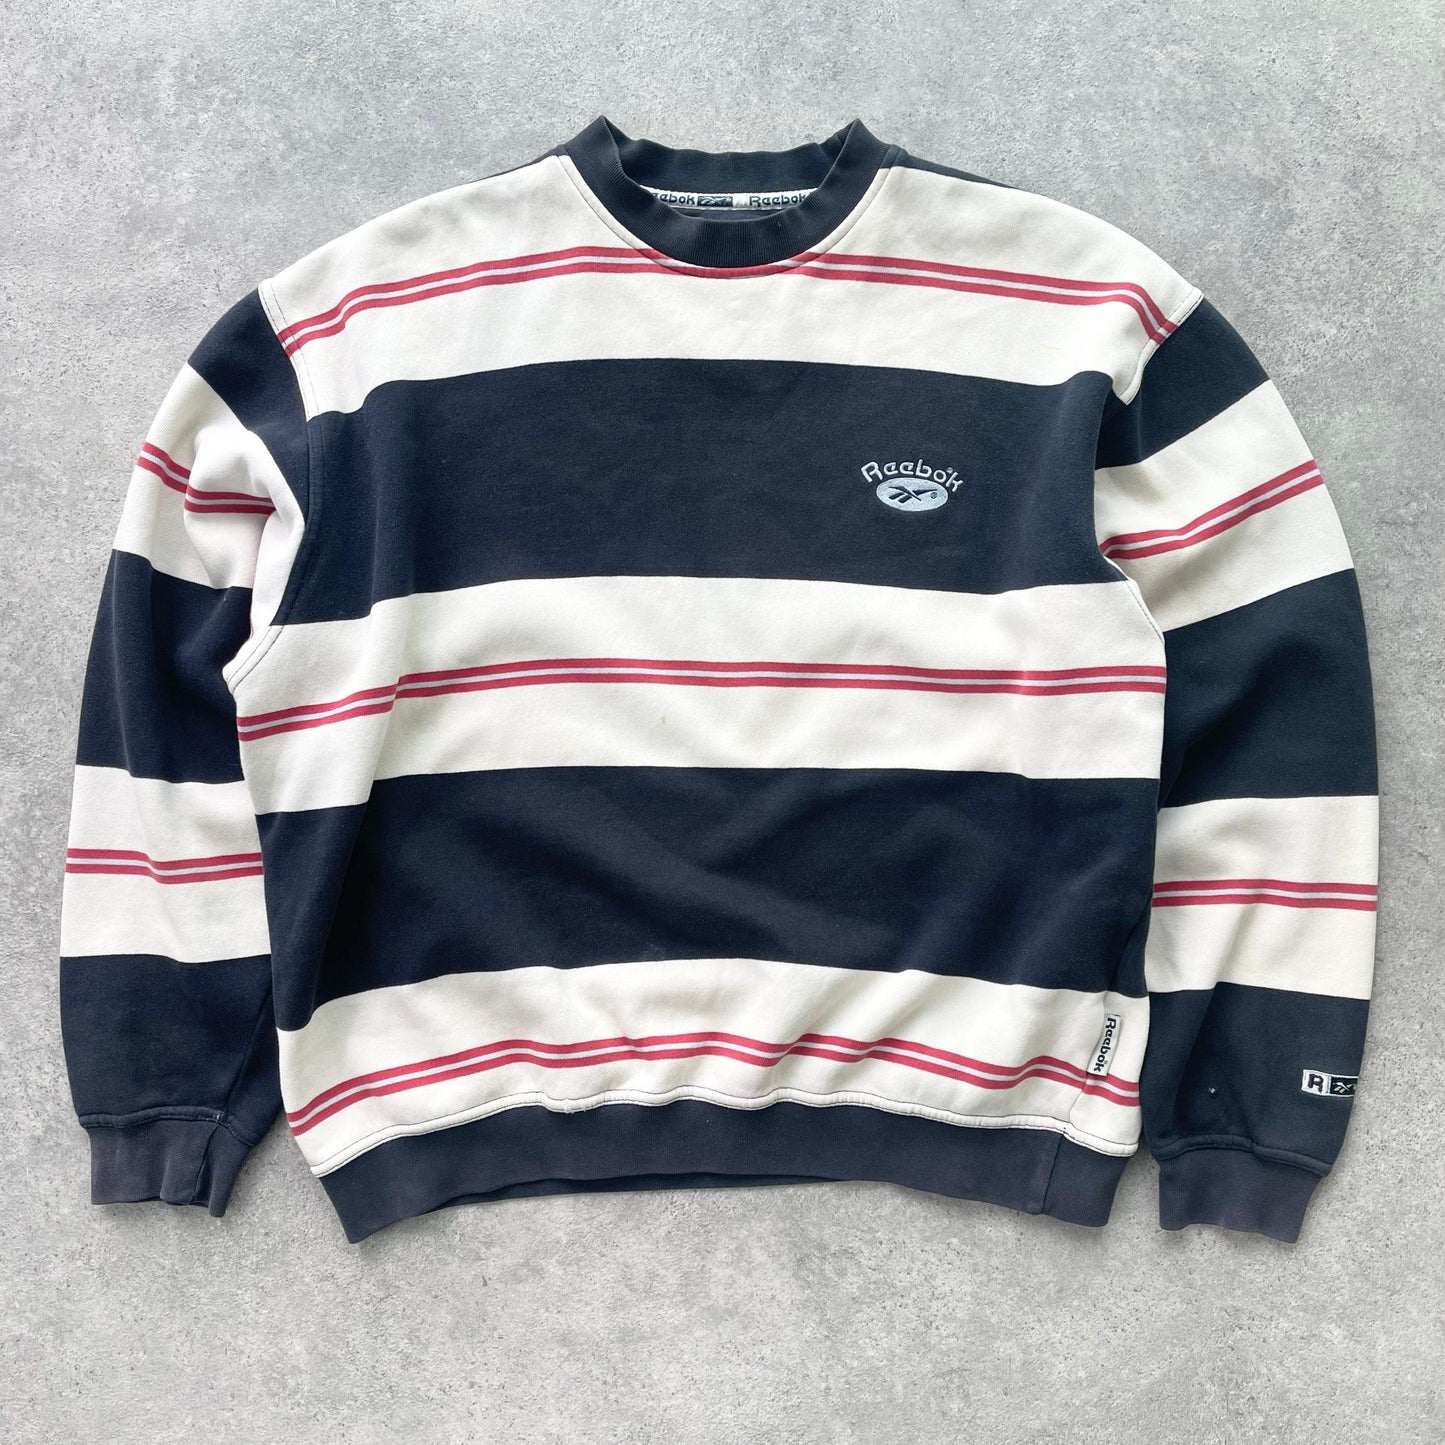 Reebok 1990s heavyweight striped embroidered sweatshirt (L) - Known Source